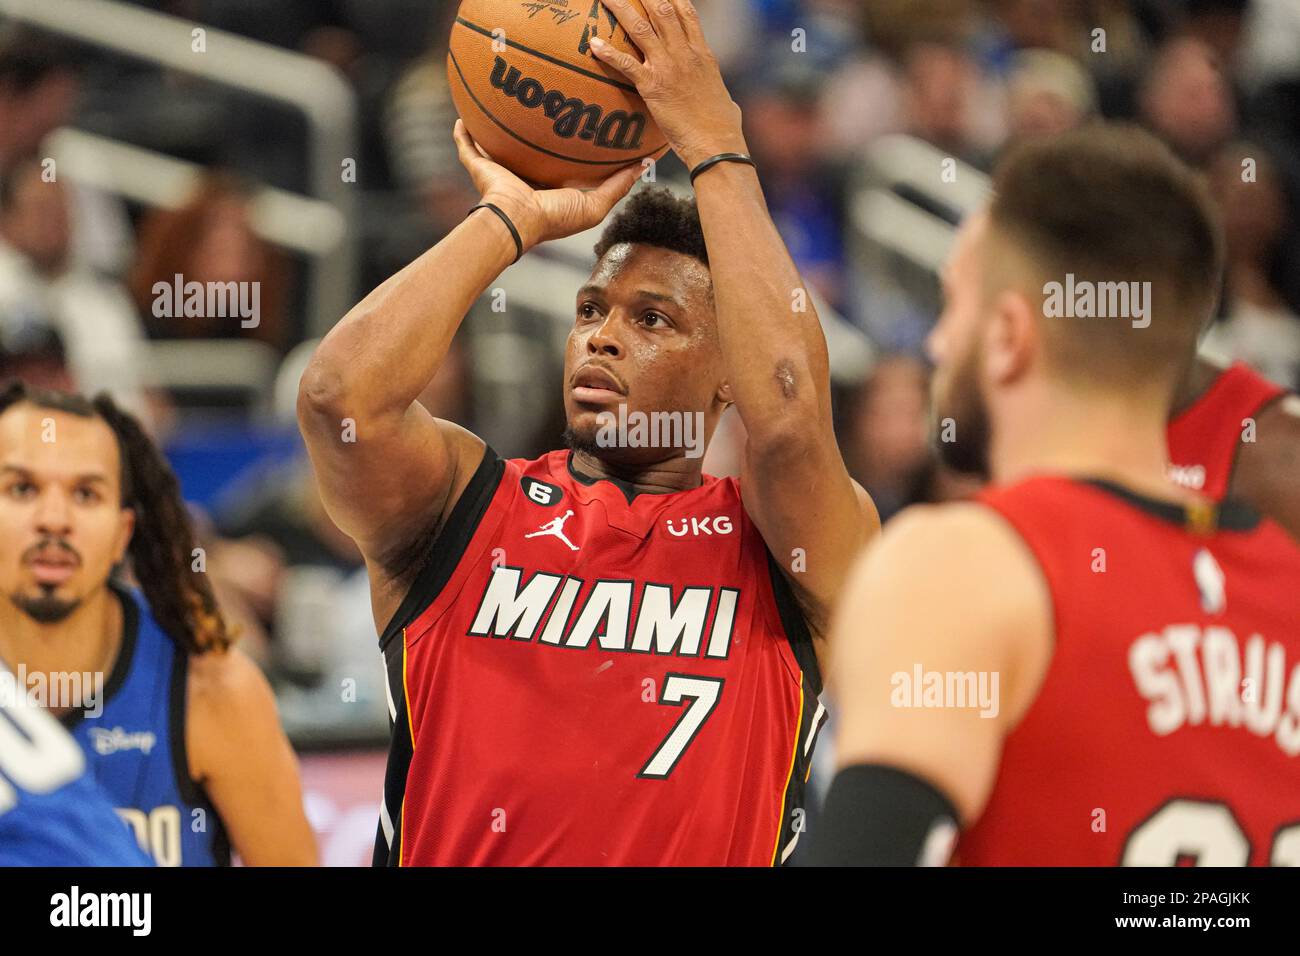 Orlando, Florida, USA, March 11, 2023, Miami Heat guard Kyle Lowry #7 shoots a free throw